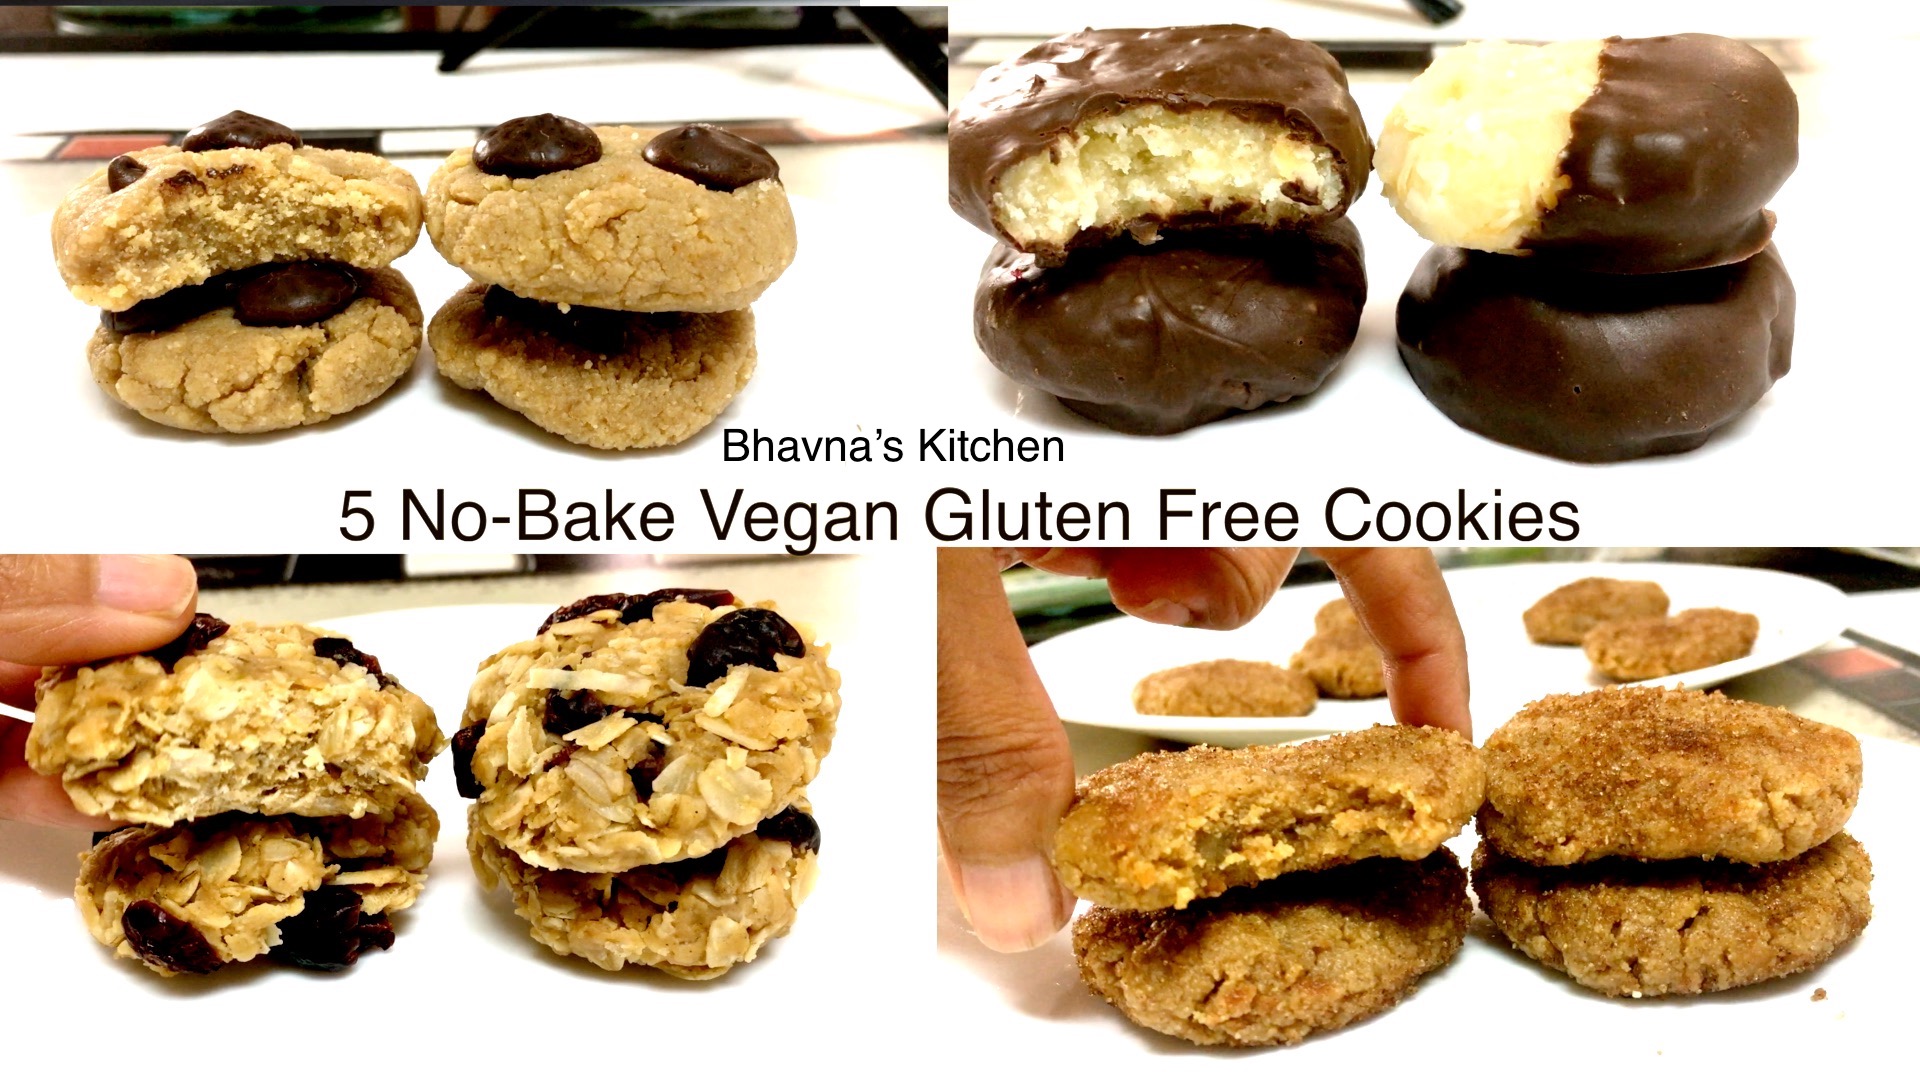 No-bake Vegan Gluten-free Cookies